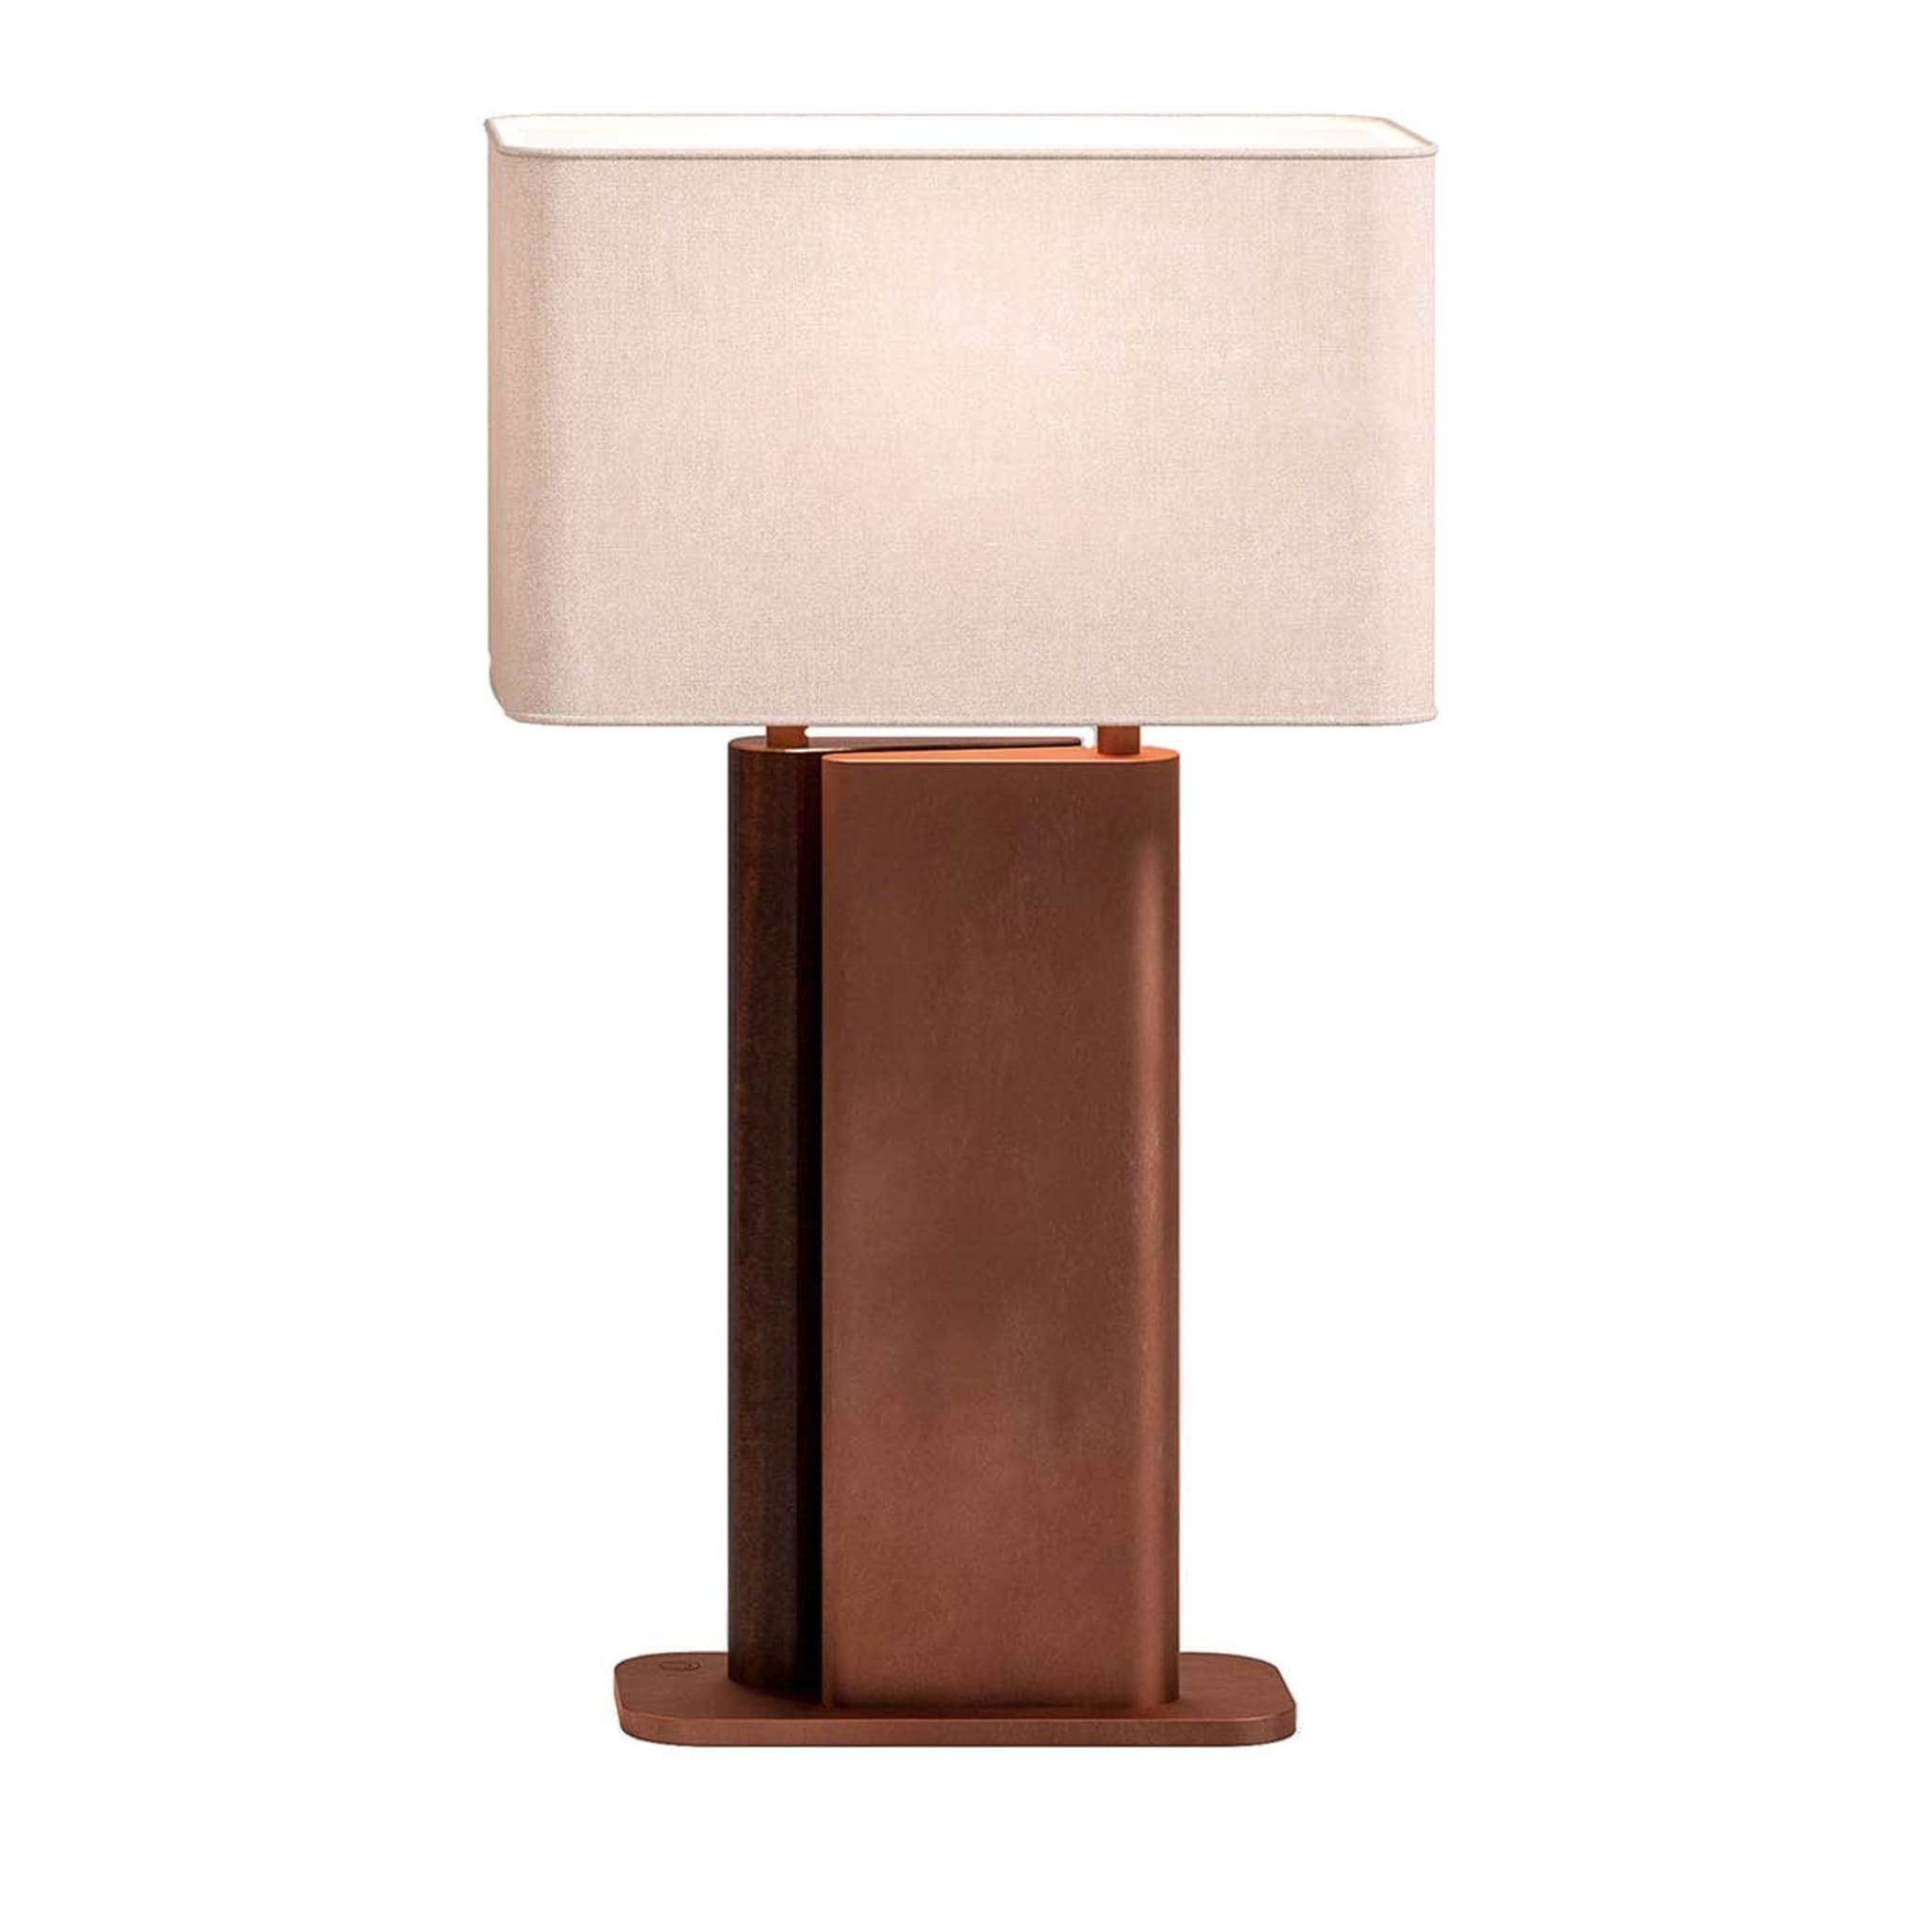 Wood and Metal Table Lamp - Main view